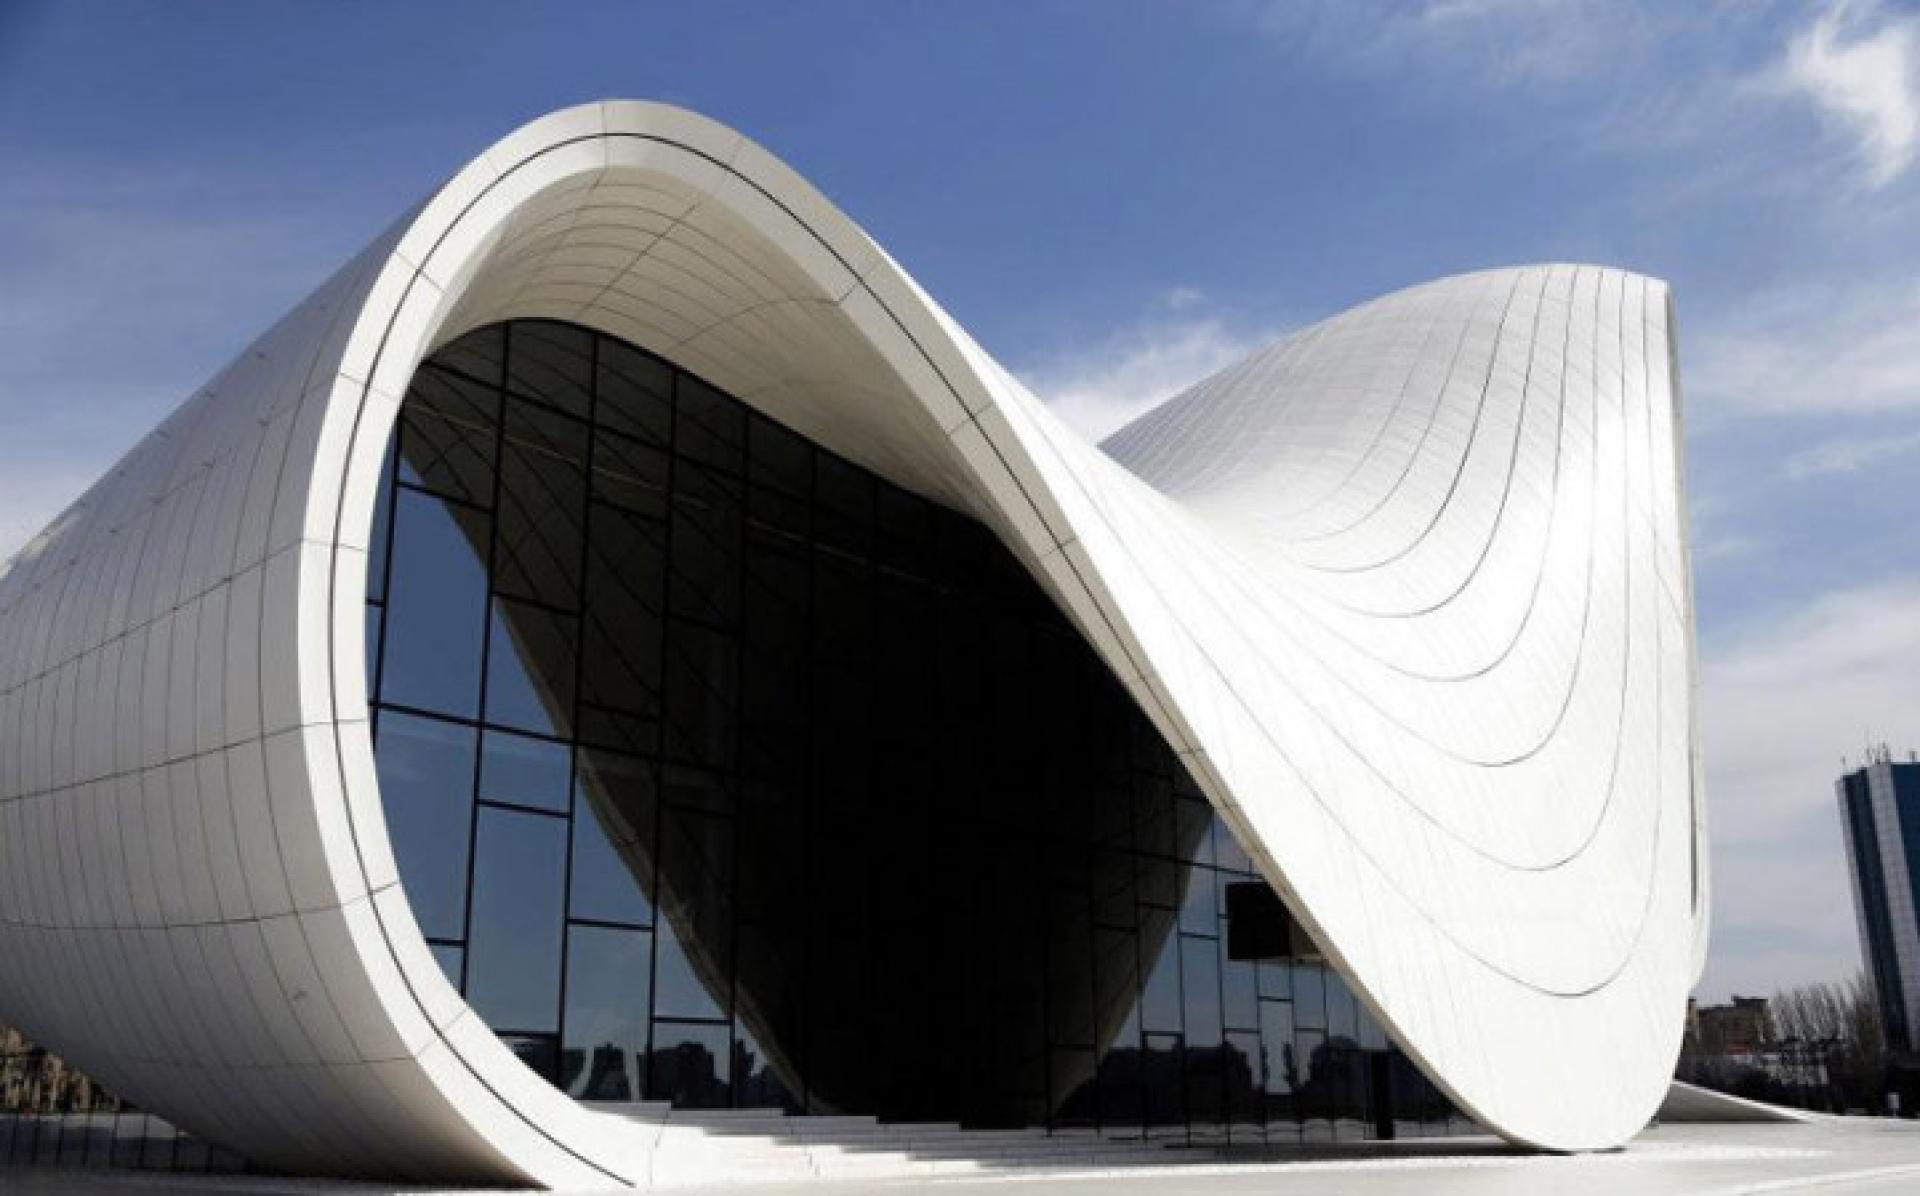 The Heydar Alijev, cultural centre in Baku, Azerbaijan is one of notable projects in last years. Photo via Mymodernmet